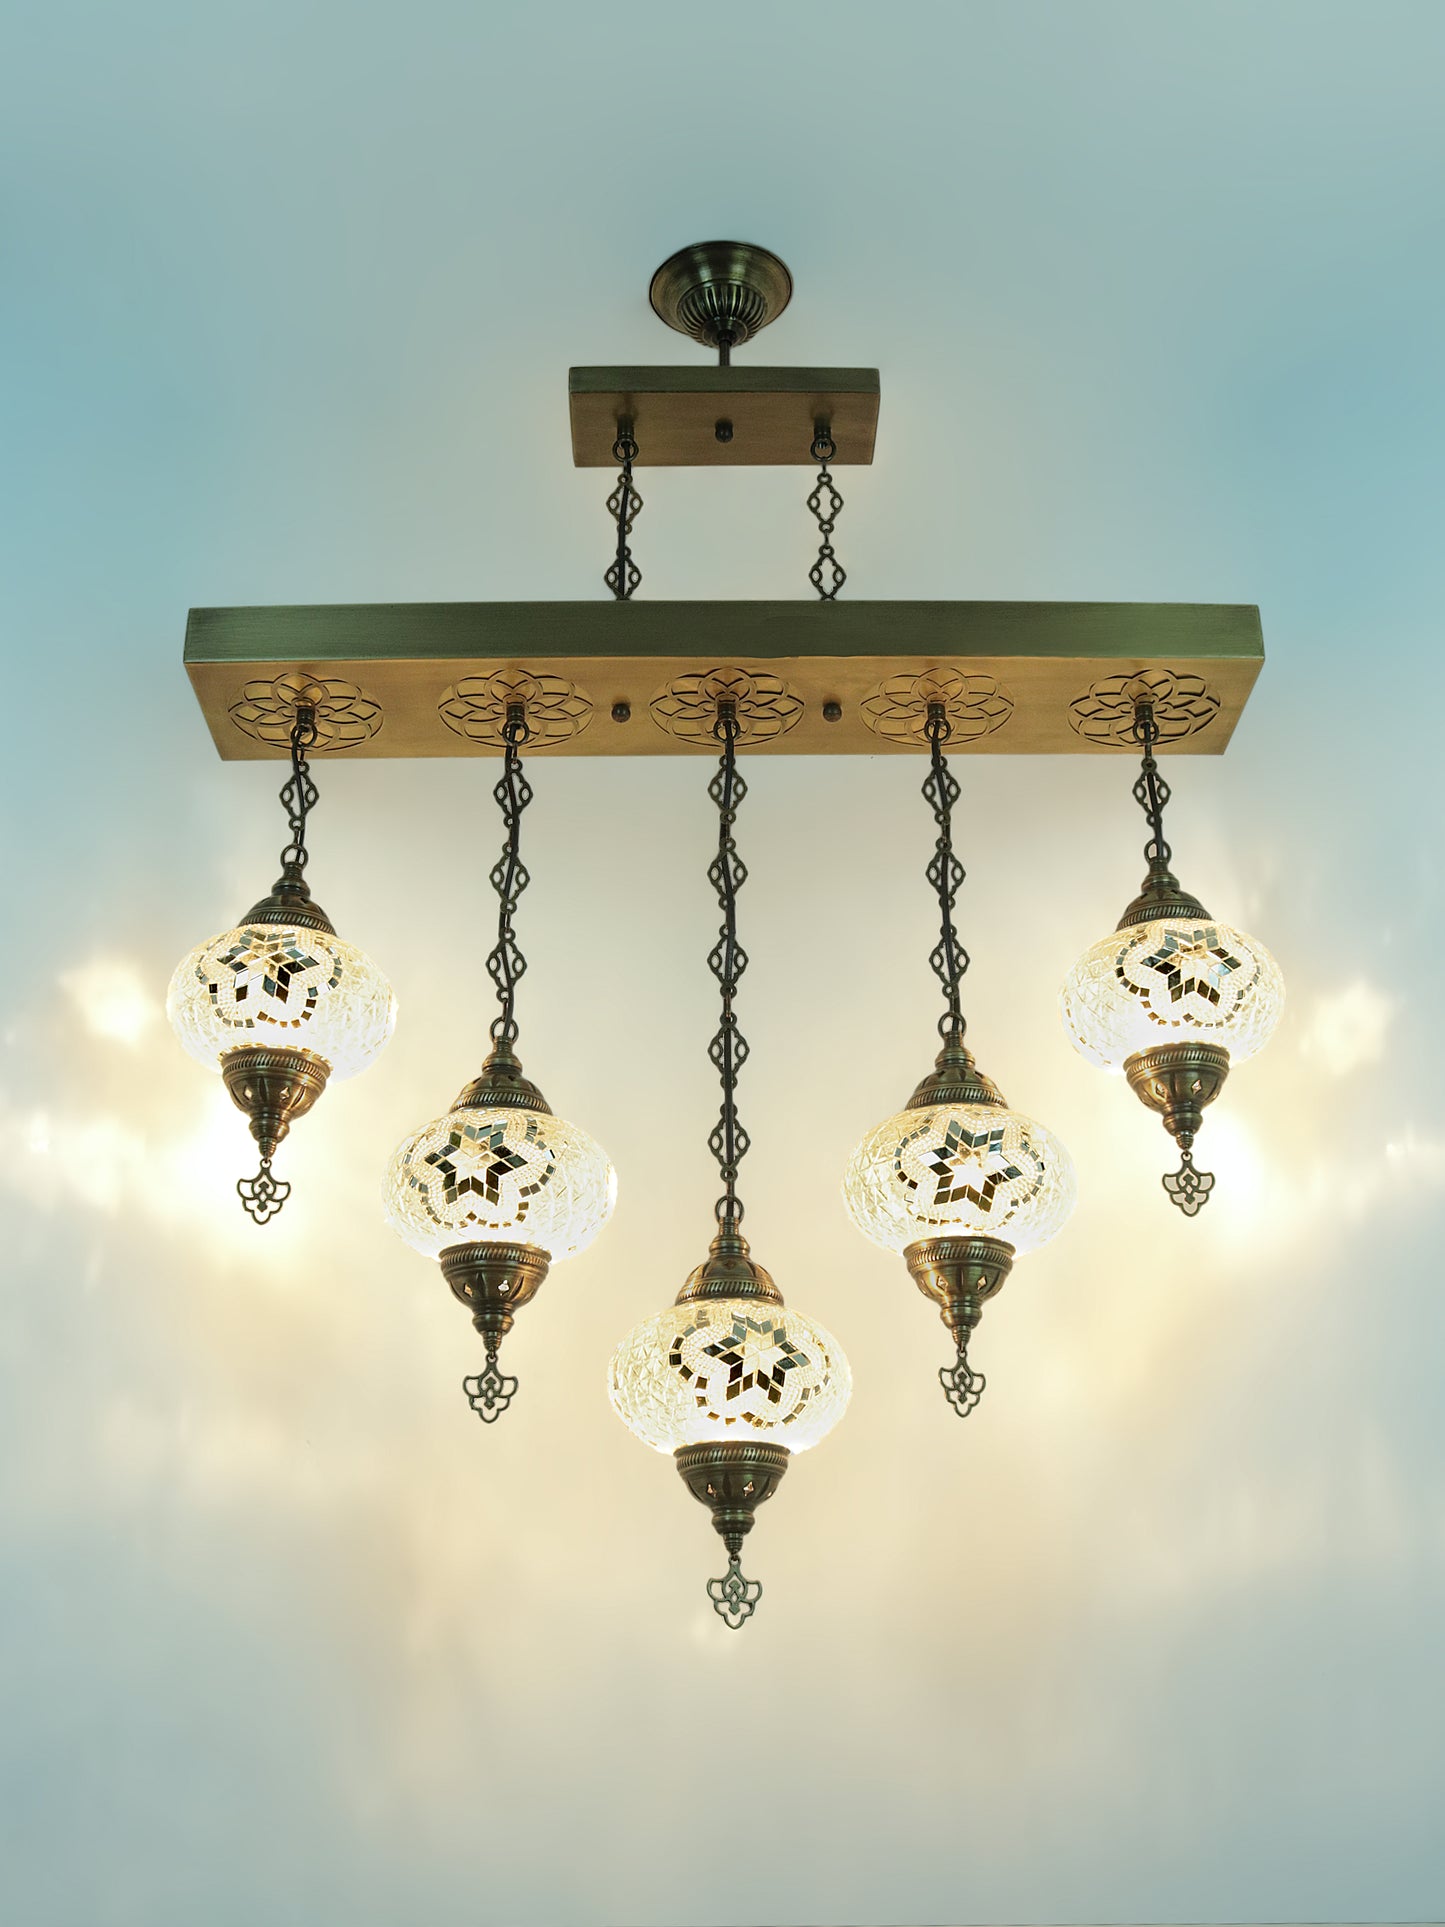 Turkish mosaic lamp dining room chandelier (WHITE FLOWER)